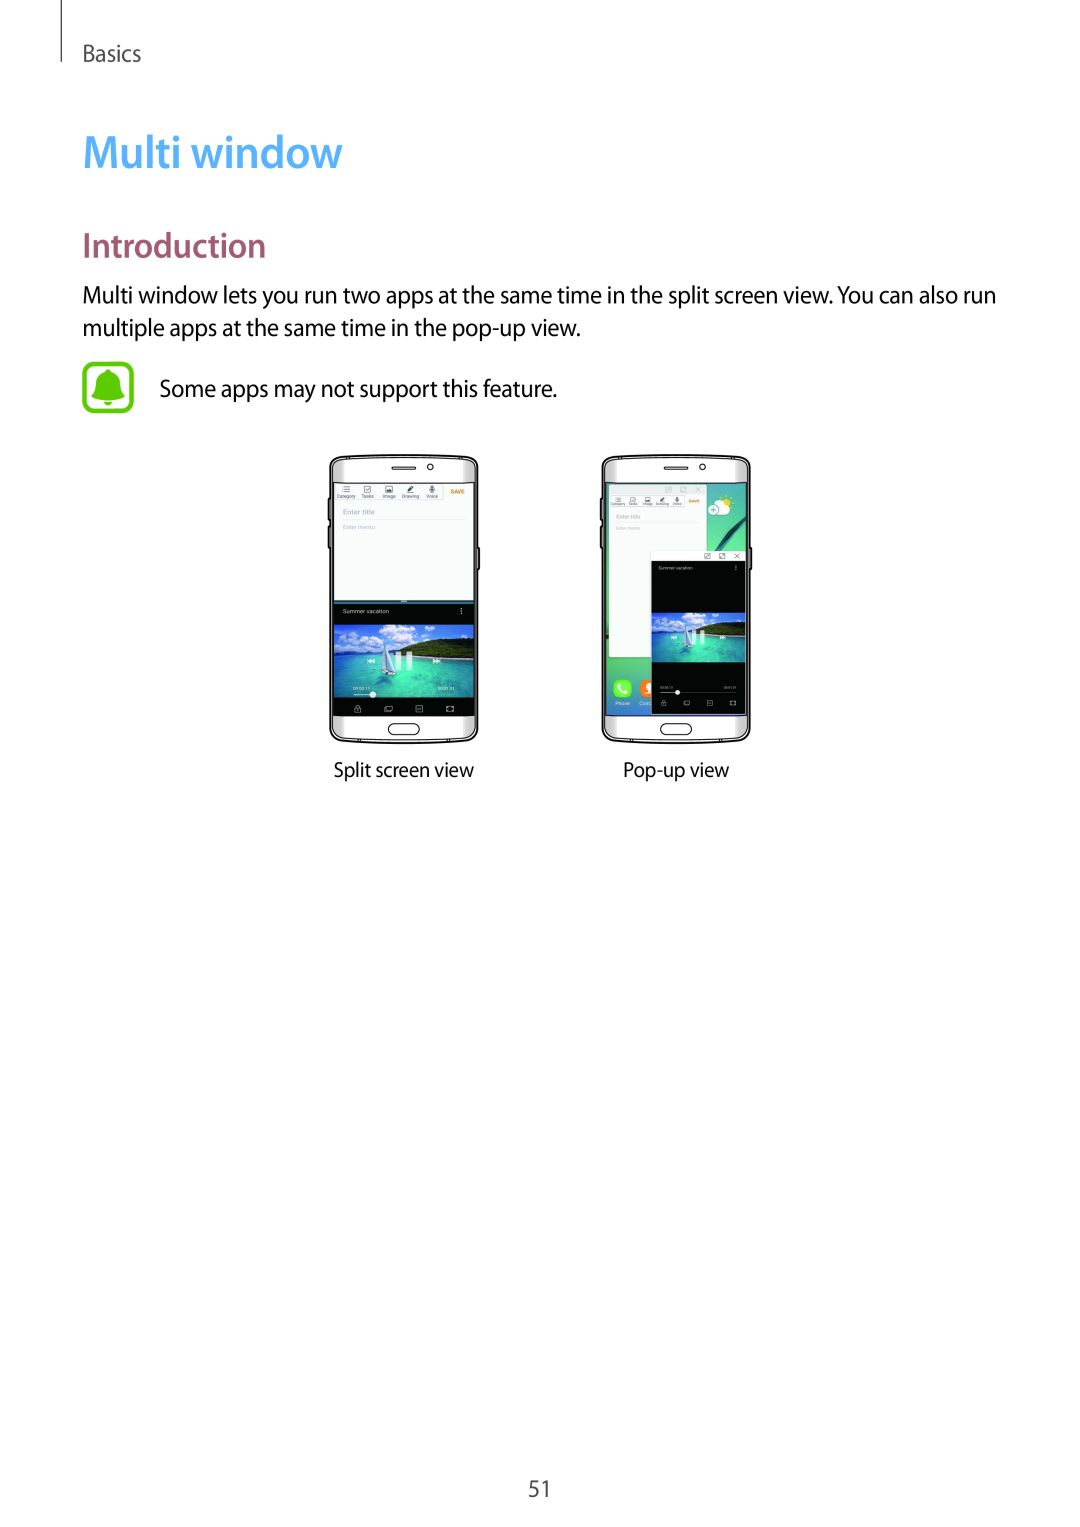 Samsung SM-G928FZKAPHE, SM-G925FZKADBT, SM-G925FZWEDBT Multi window, Introduction, Basics, Split screen view, Pop-up view 